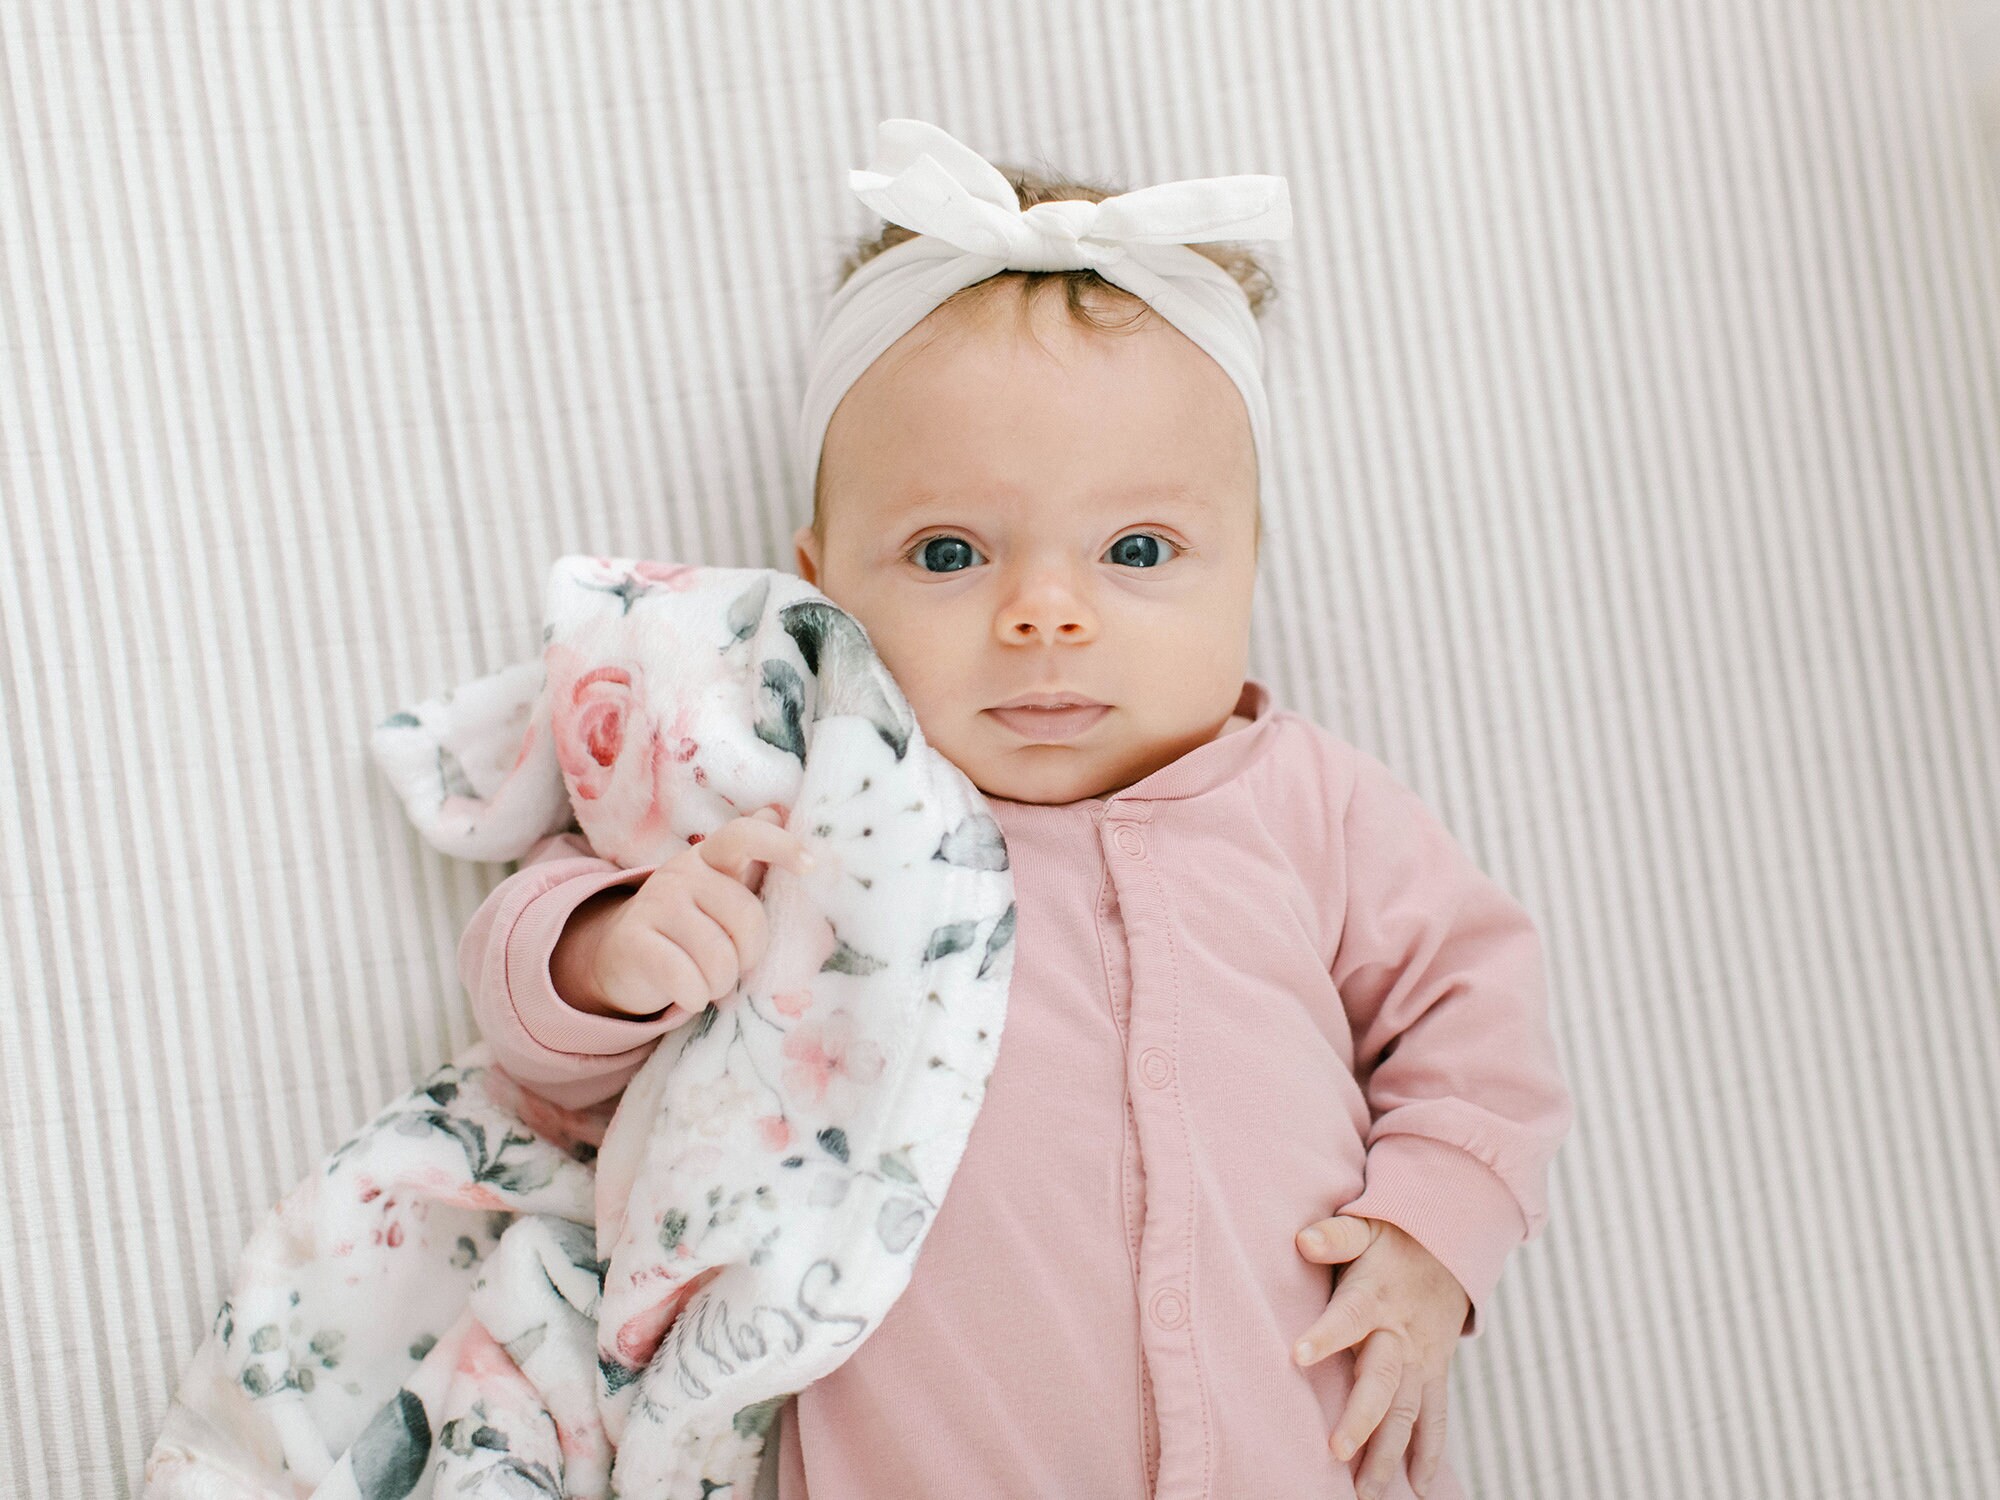 On Wednesdays We Wear Pink Burn Book Font Baby Blanket - Mean Girls Costume  - Baby Blankets sold by Juieta-Incompatible, SKU 855035